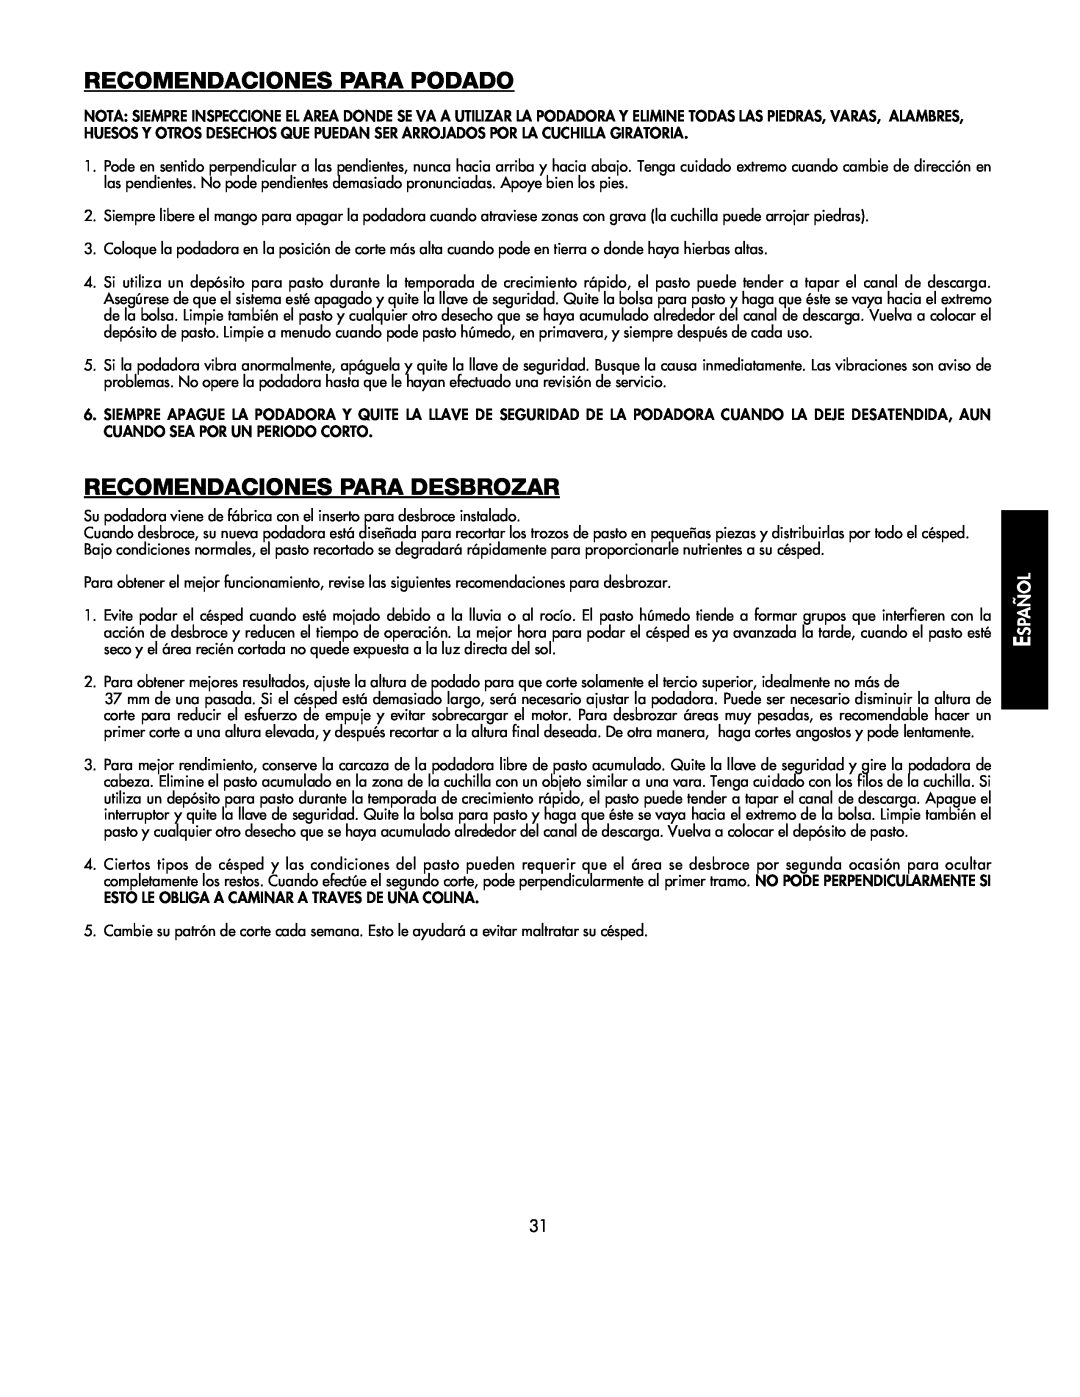 Black & Decker 598968-00 instruction manual Recomendaciones Para Podado, Recomendaciones Para Desbrozar 